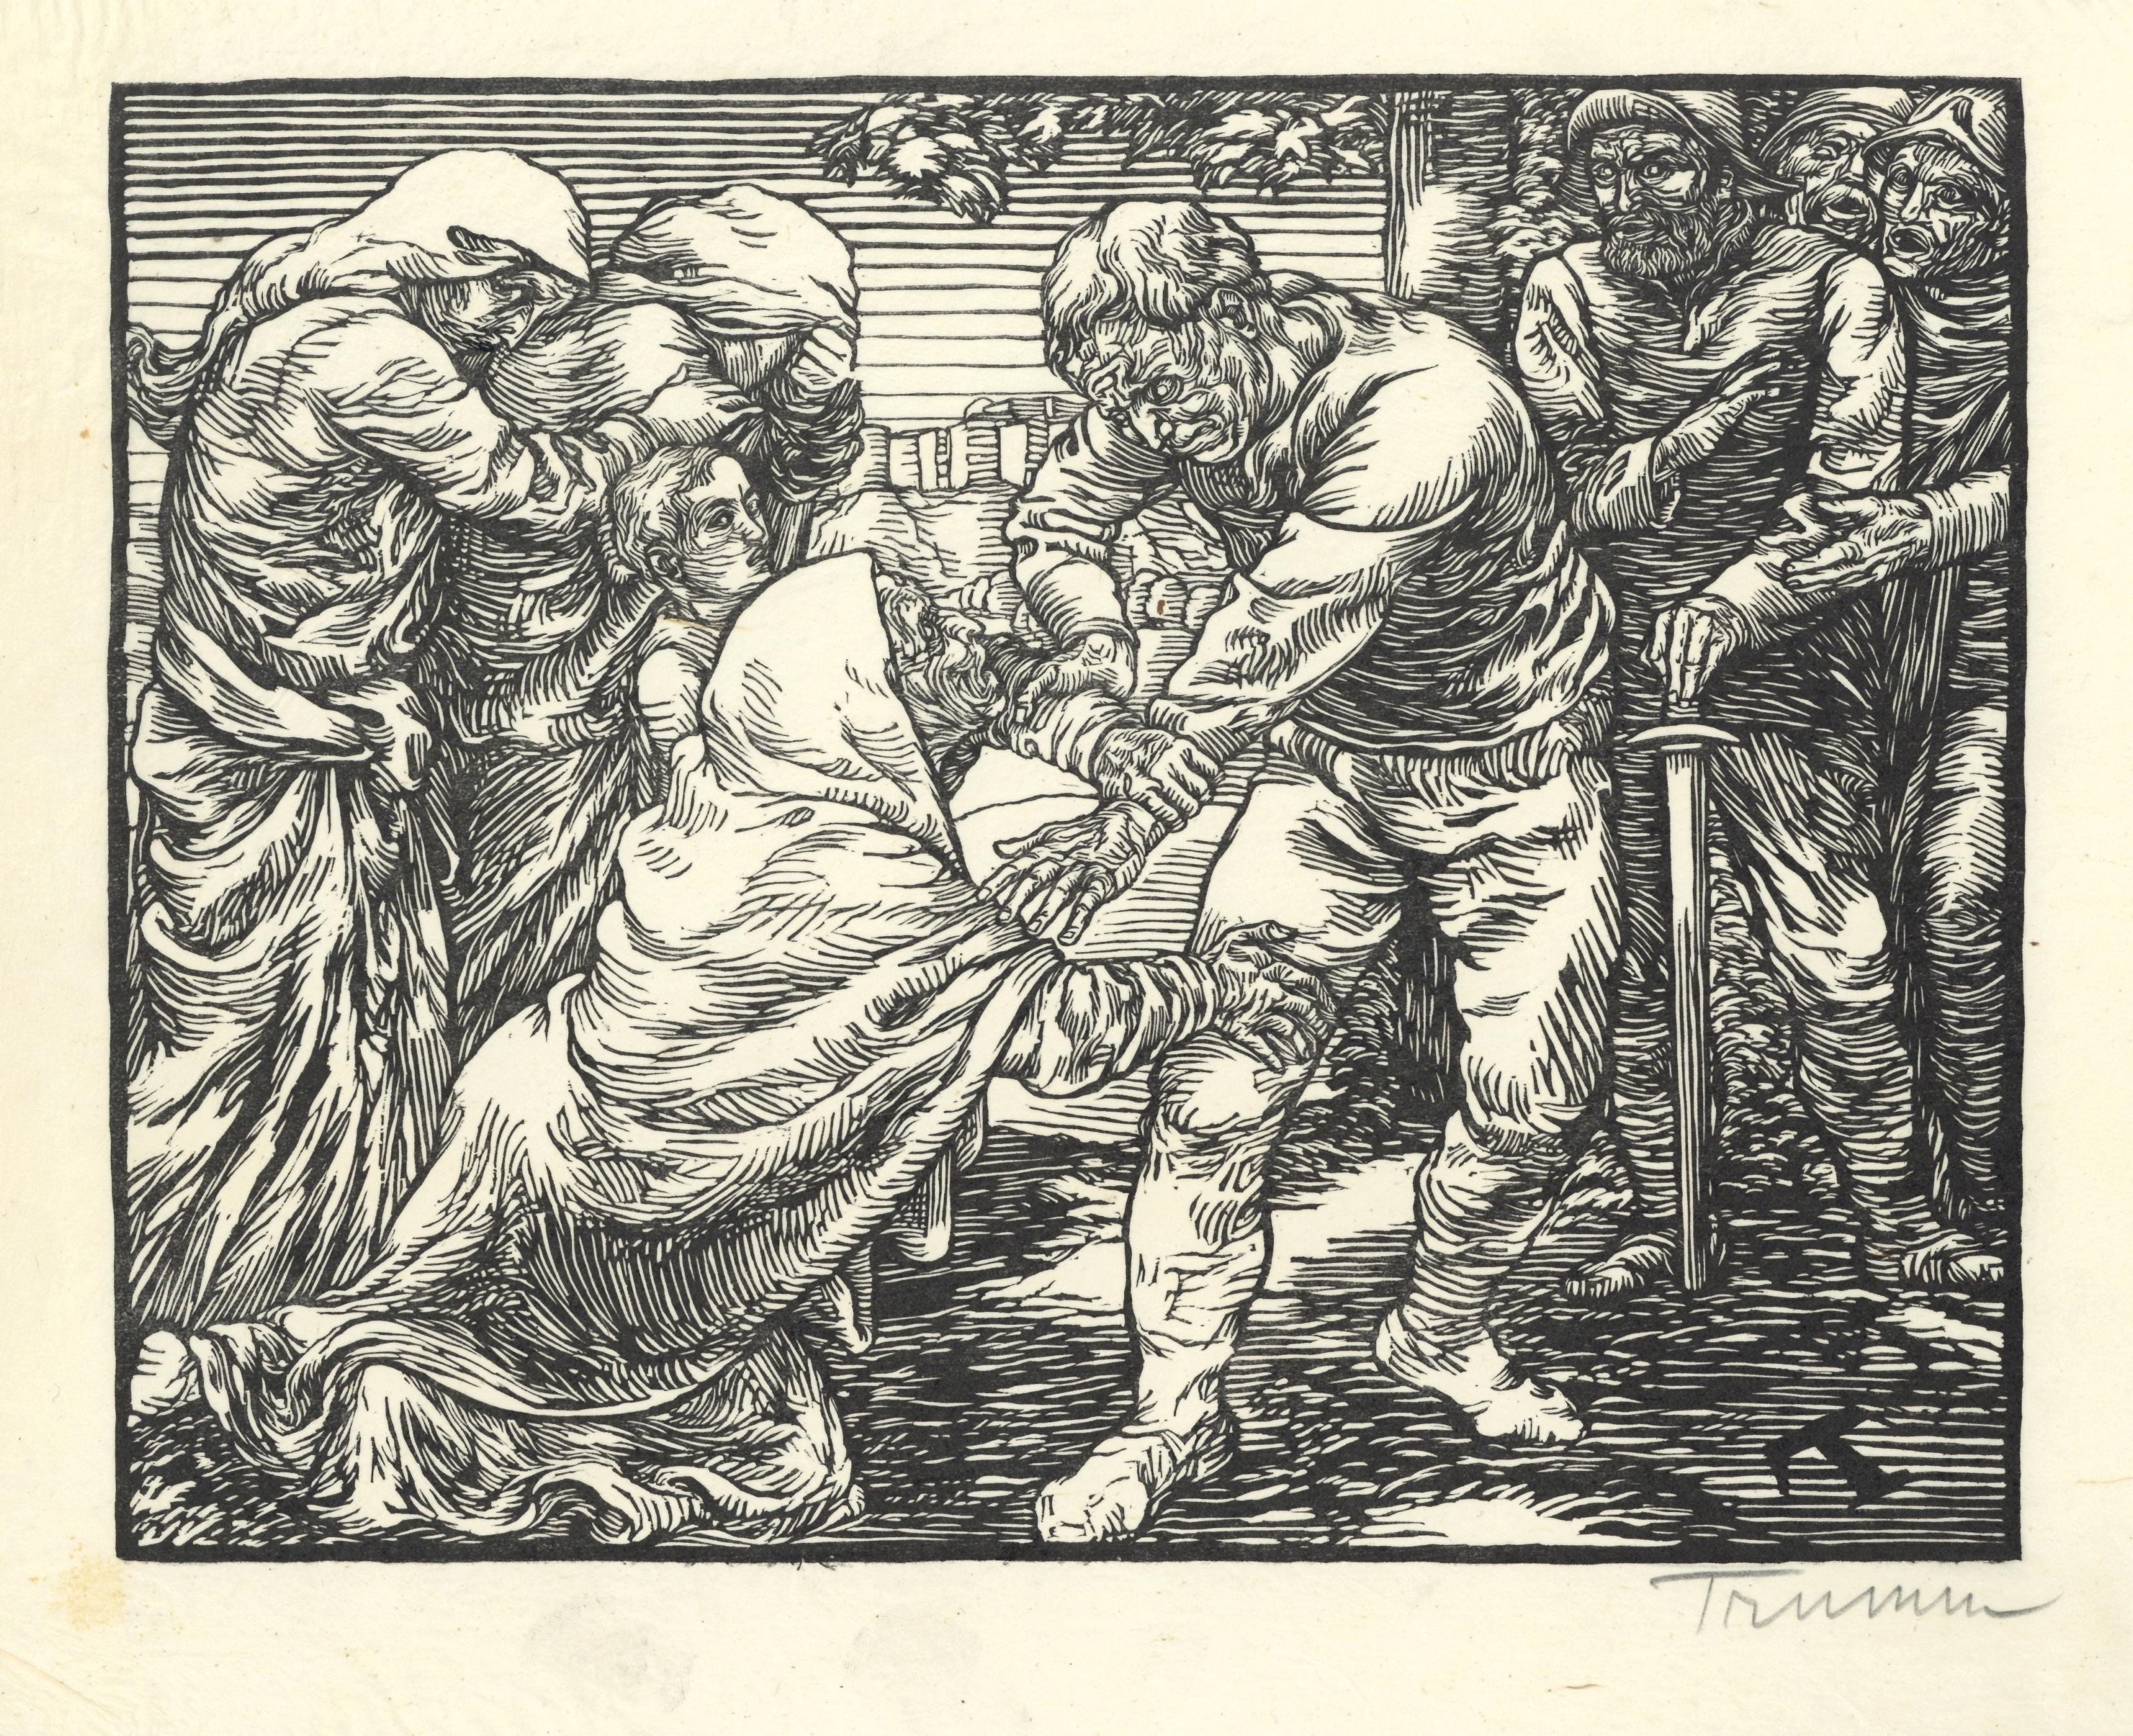 Peter Trumm Figurative Print - "Coriolan und seine Mutter" signed original woodcut